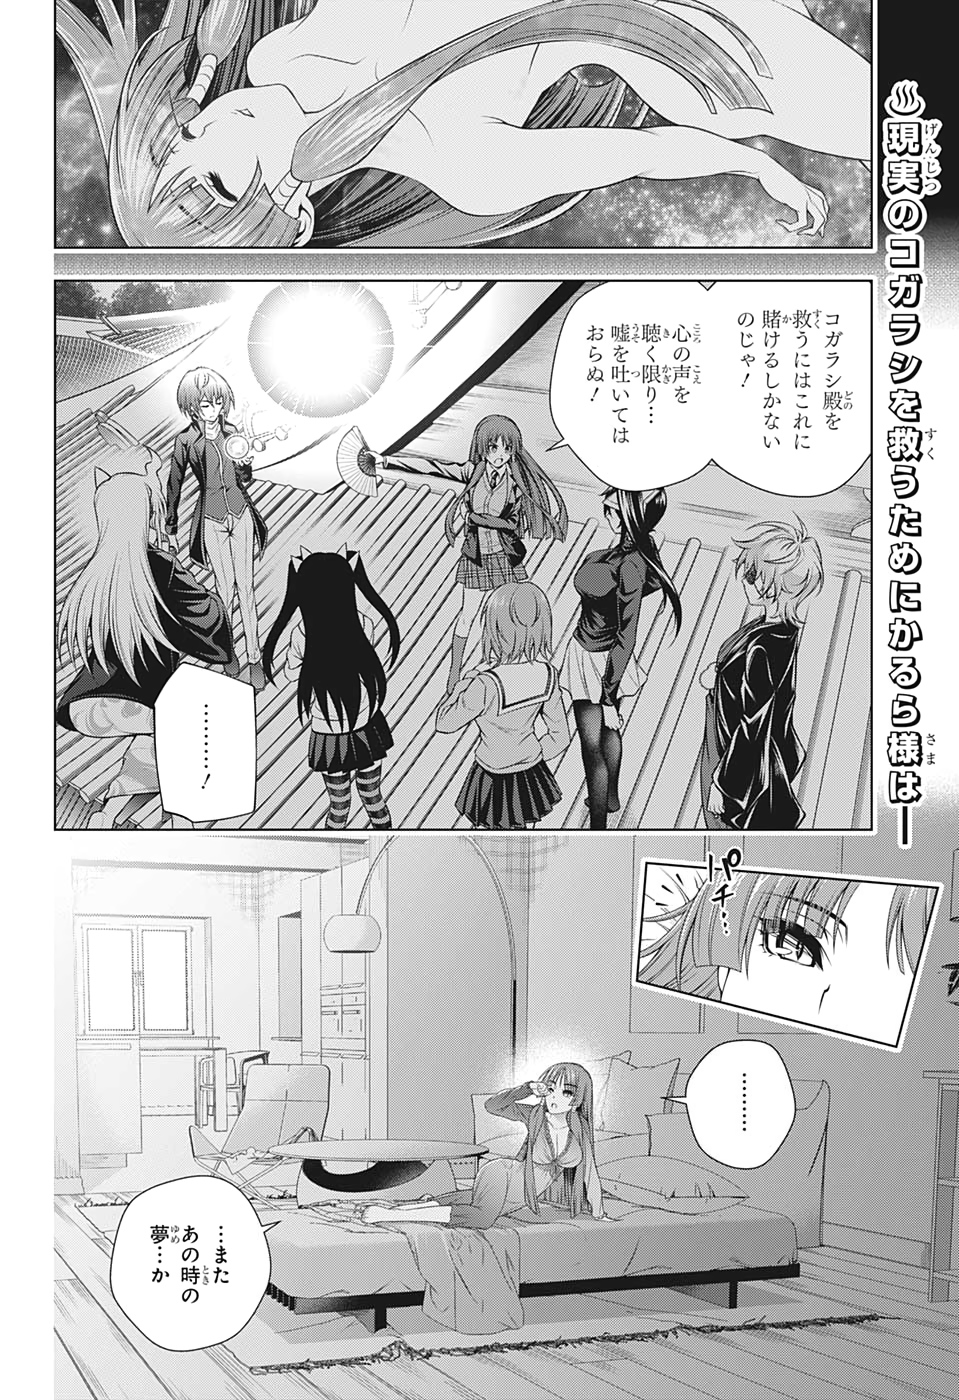 Yuragi-sou no Yuuna-san - ゆらぎ荘の幽奈さん - Chapter 202 - Page 2